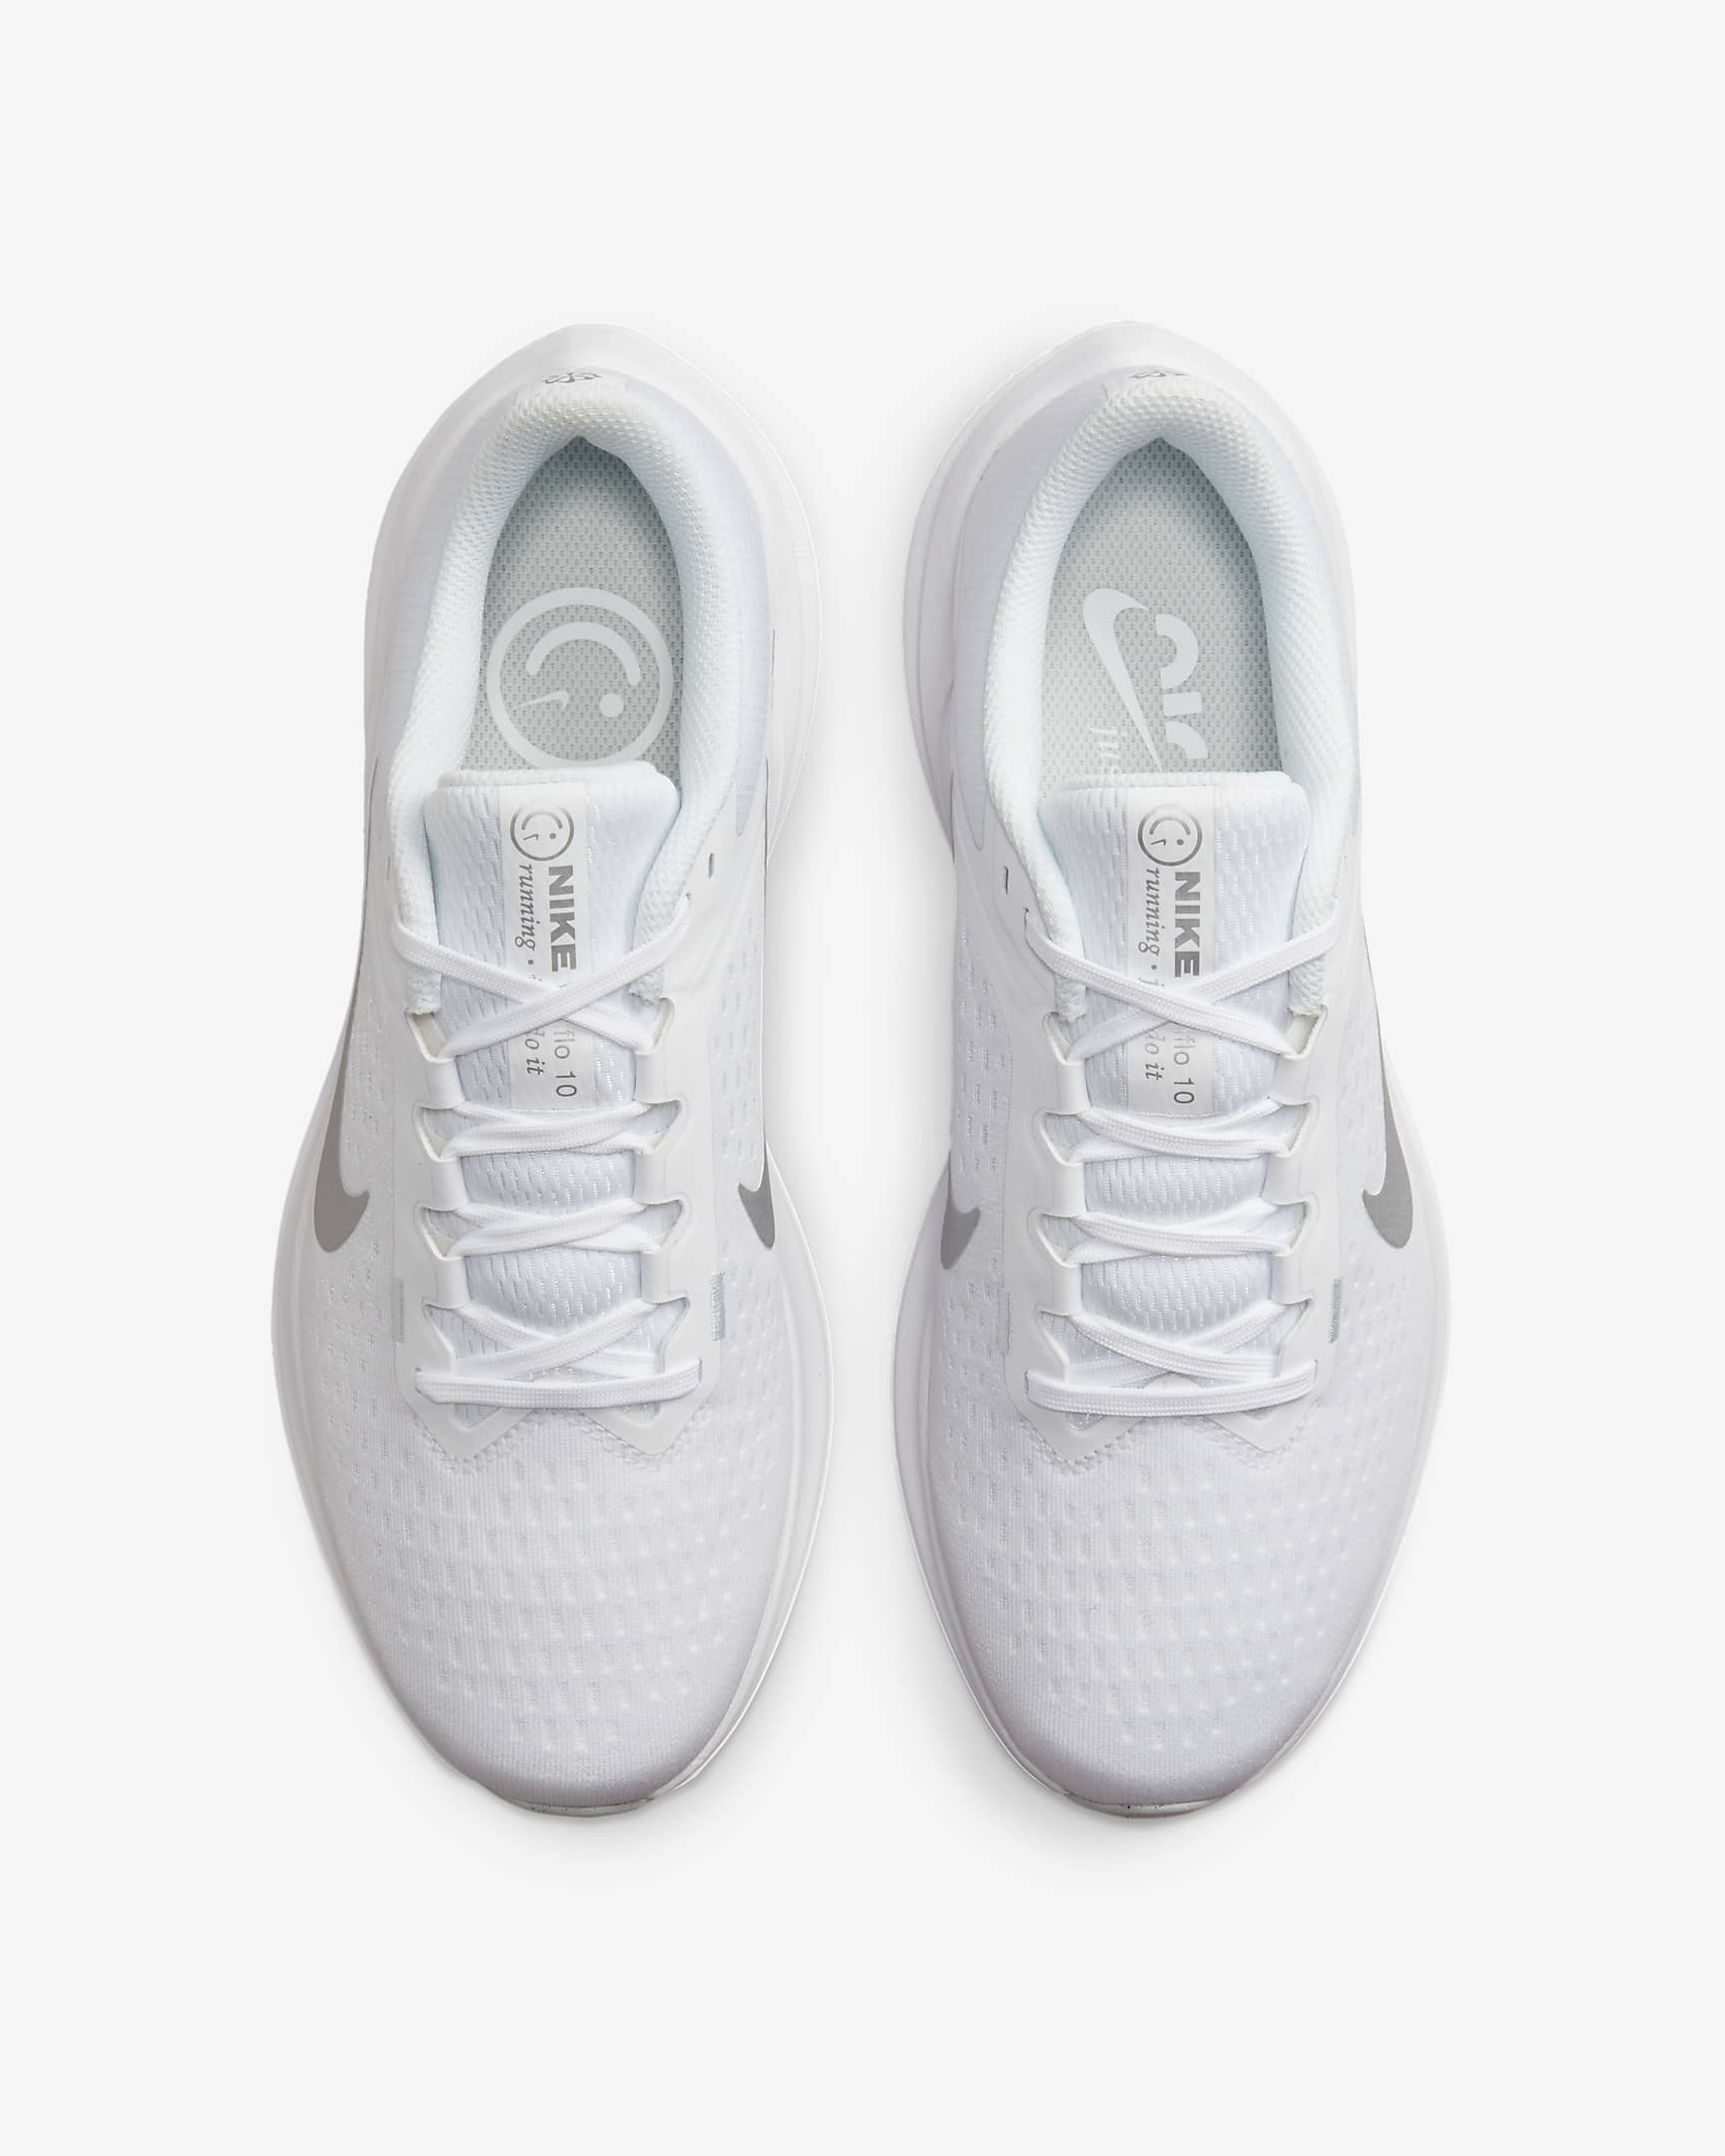 Nike Winflo 10 Women's Road Running Shoes - White/Pure Platinum/Metallic Silver